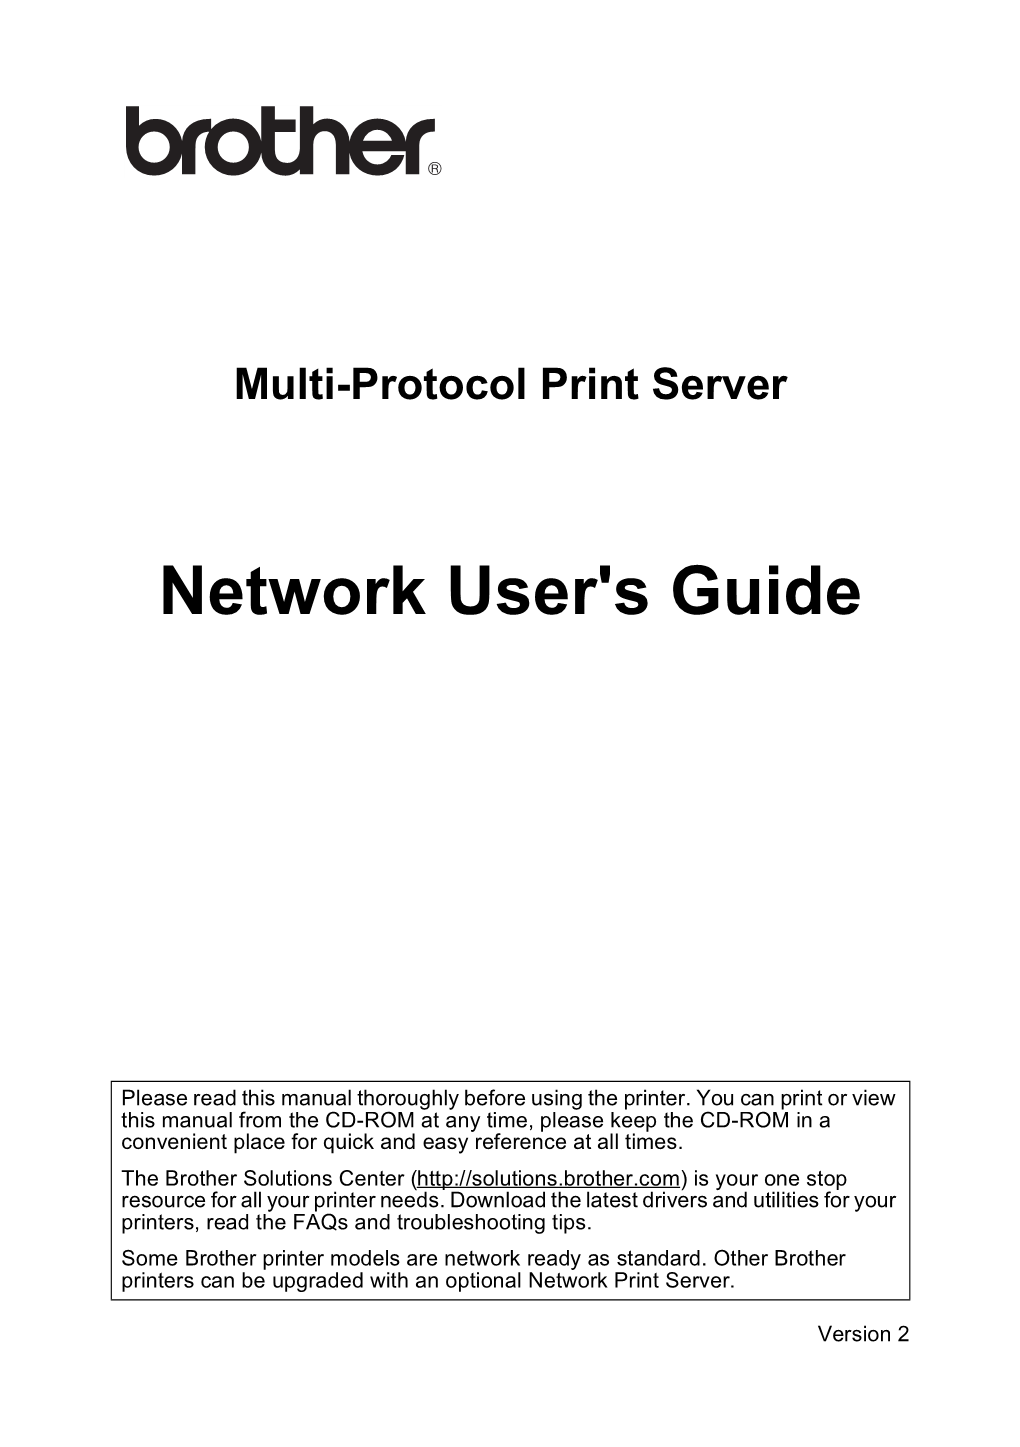 Network User's Guide